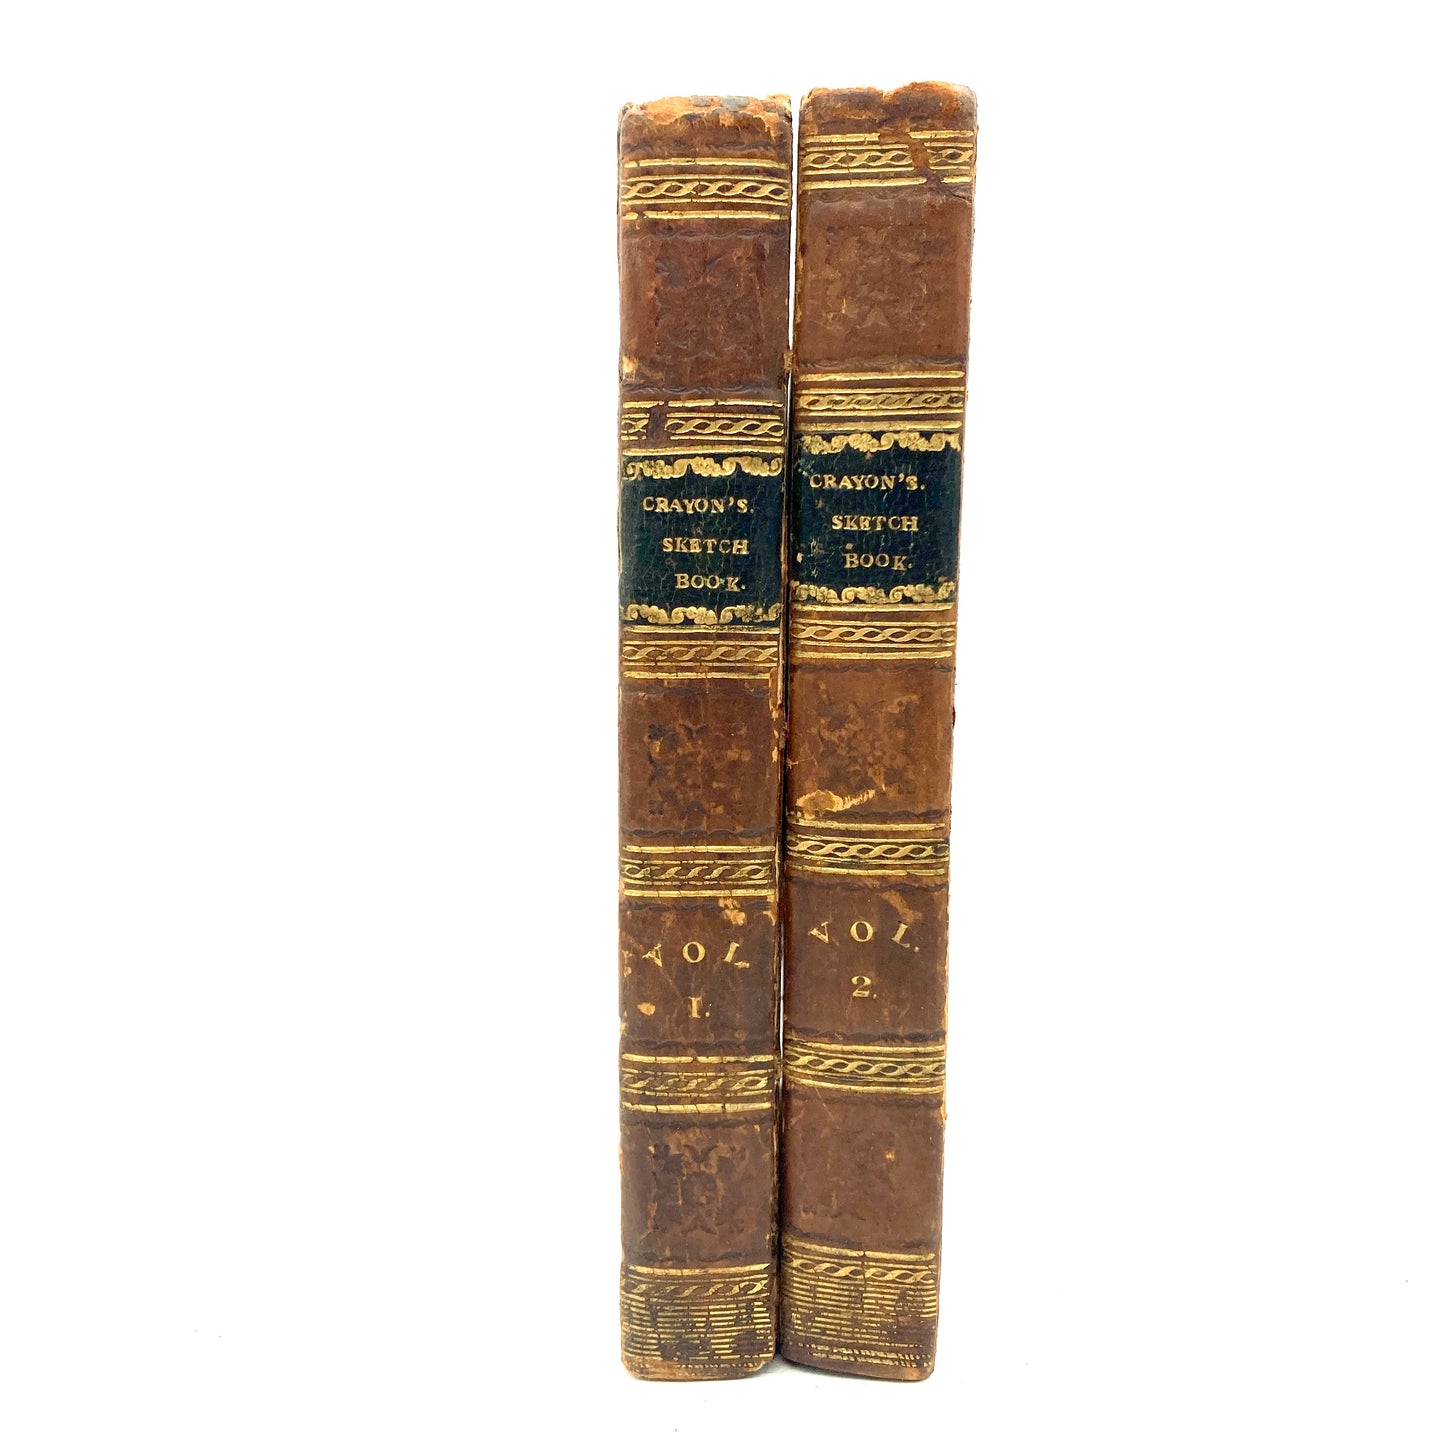 IRVING, Washington "The Sketch Book of Geoffrey Crayon" [John Murray, 1821] 5th Edition - Buzz Bookstore